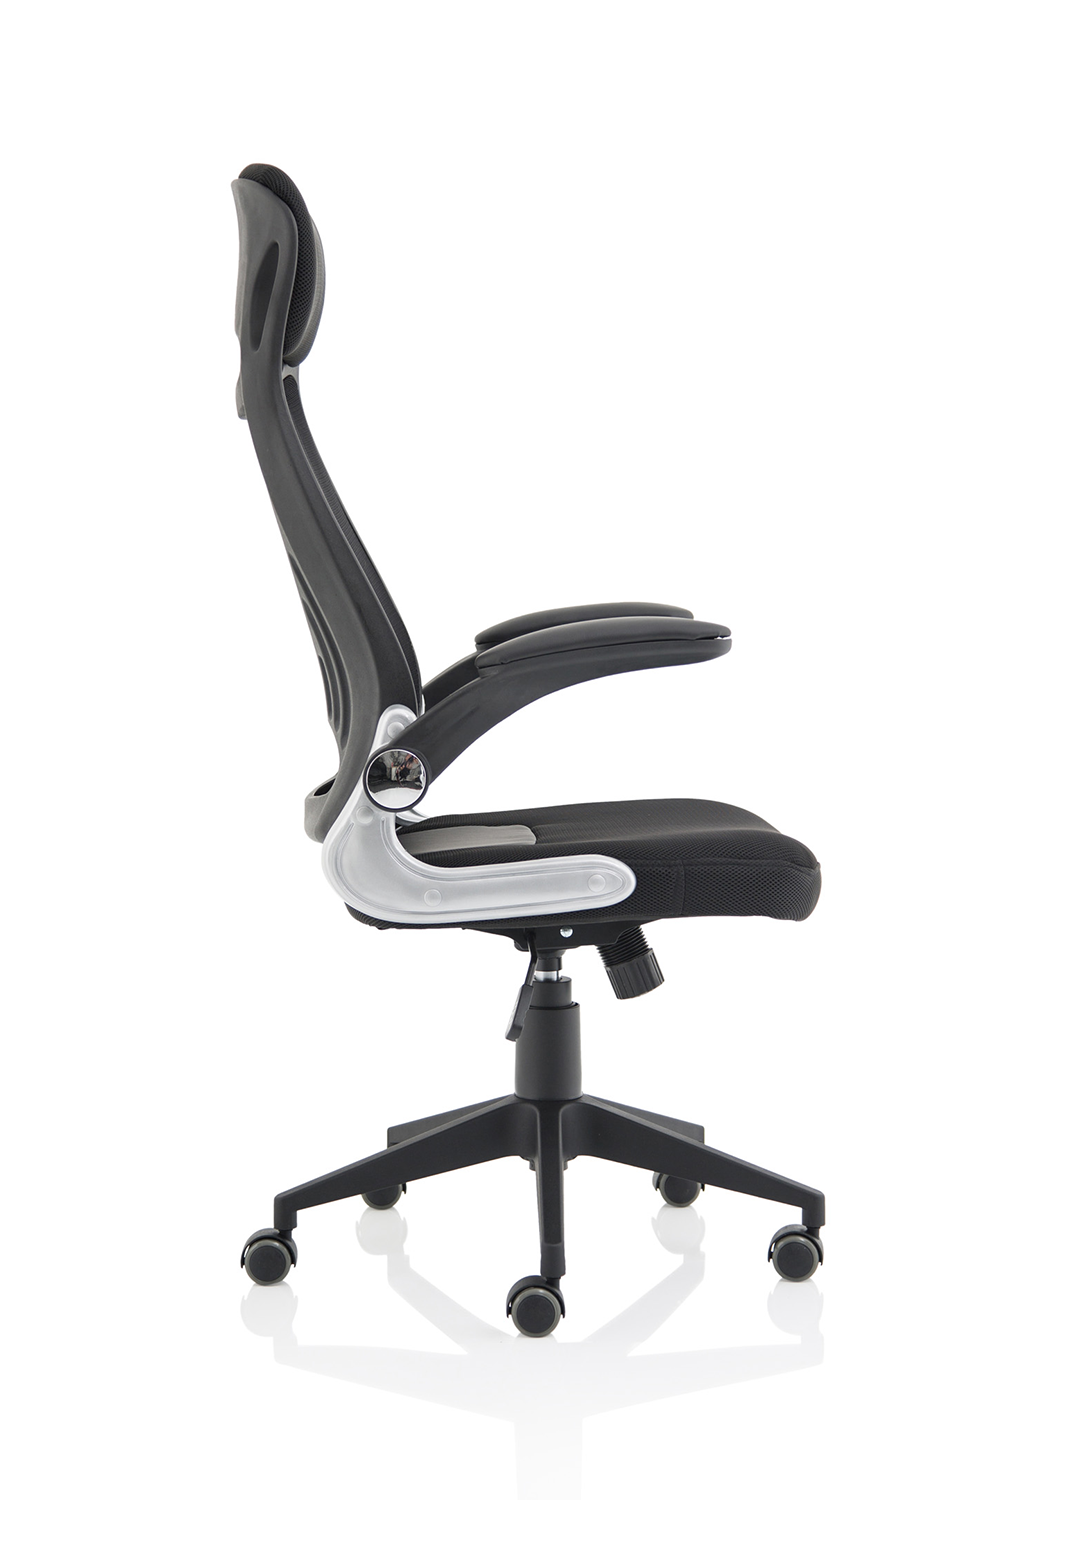 Saturn Executive Chair